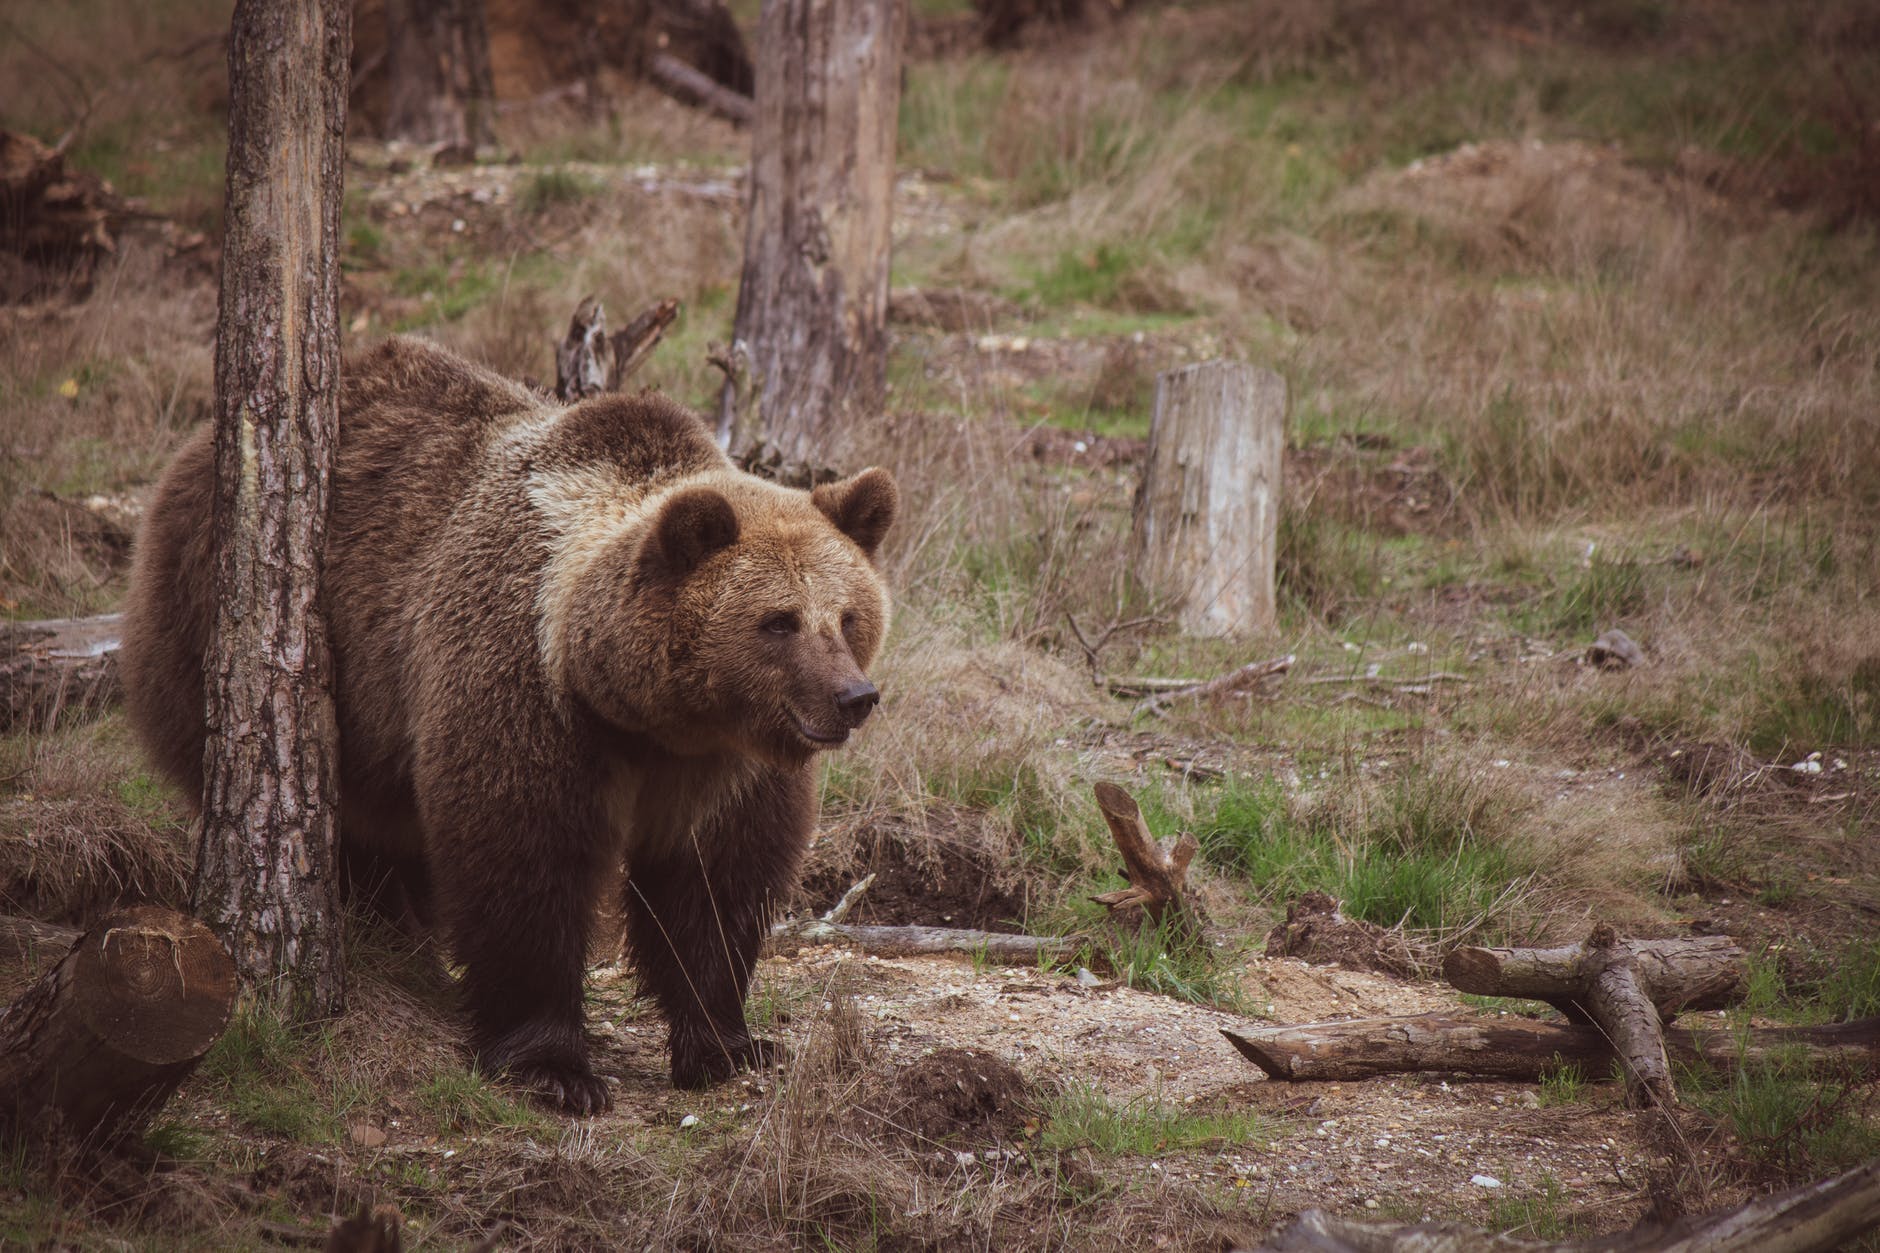 A brown bear | Source: Pexels